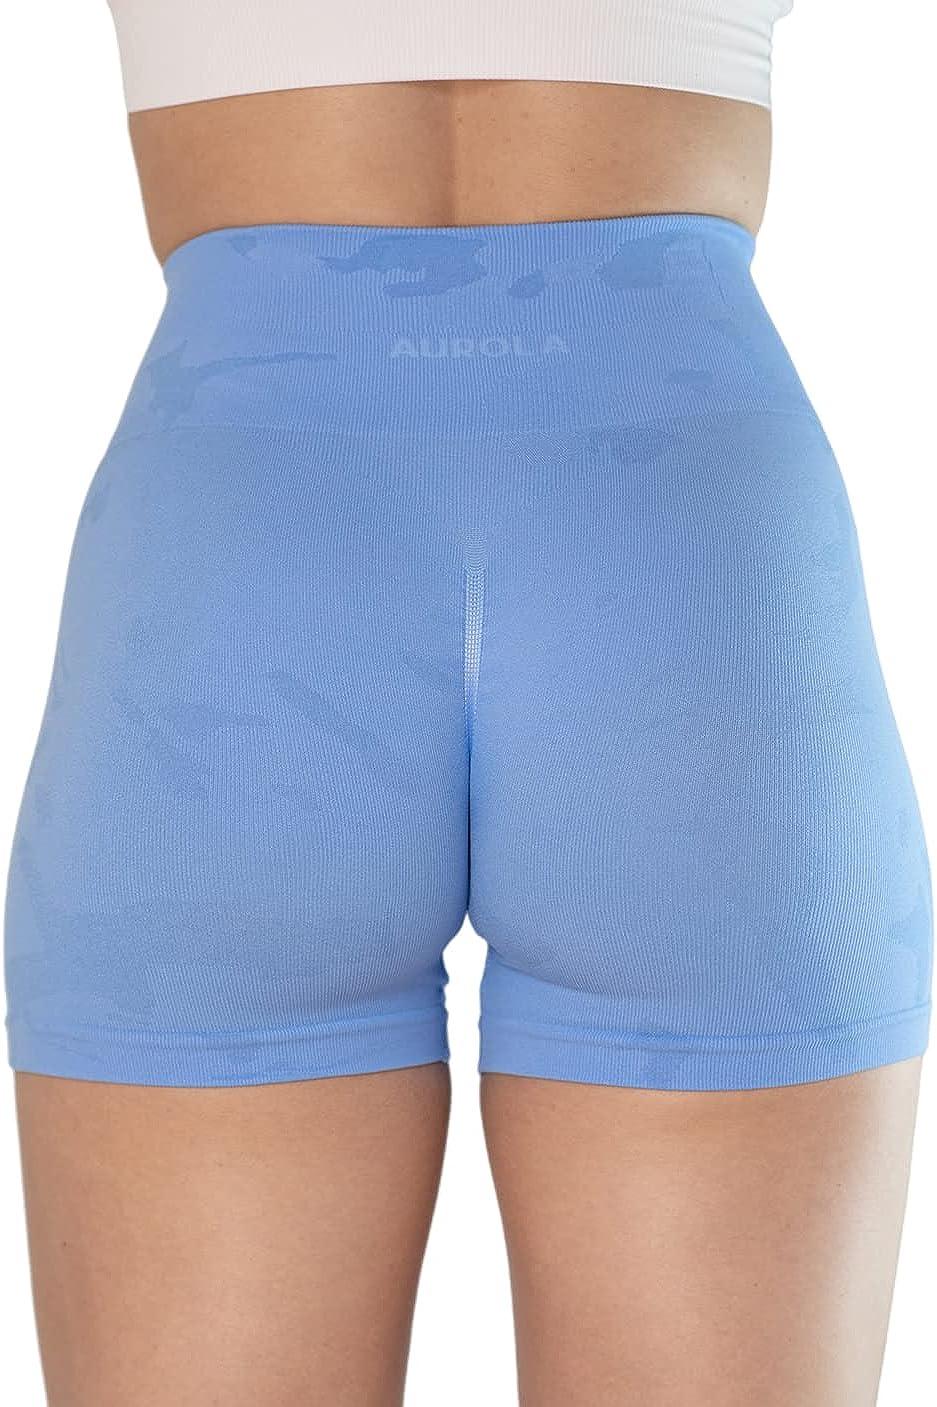 AUROLA Seamless Scrunch Black Booty Shorts For Women Perfect For